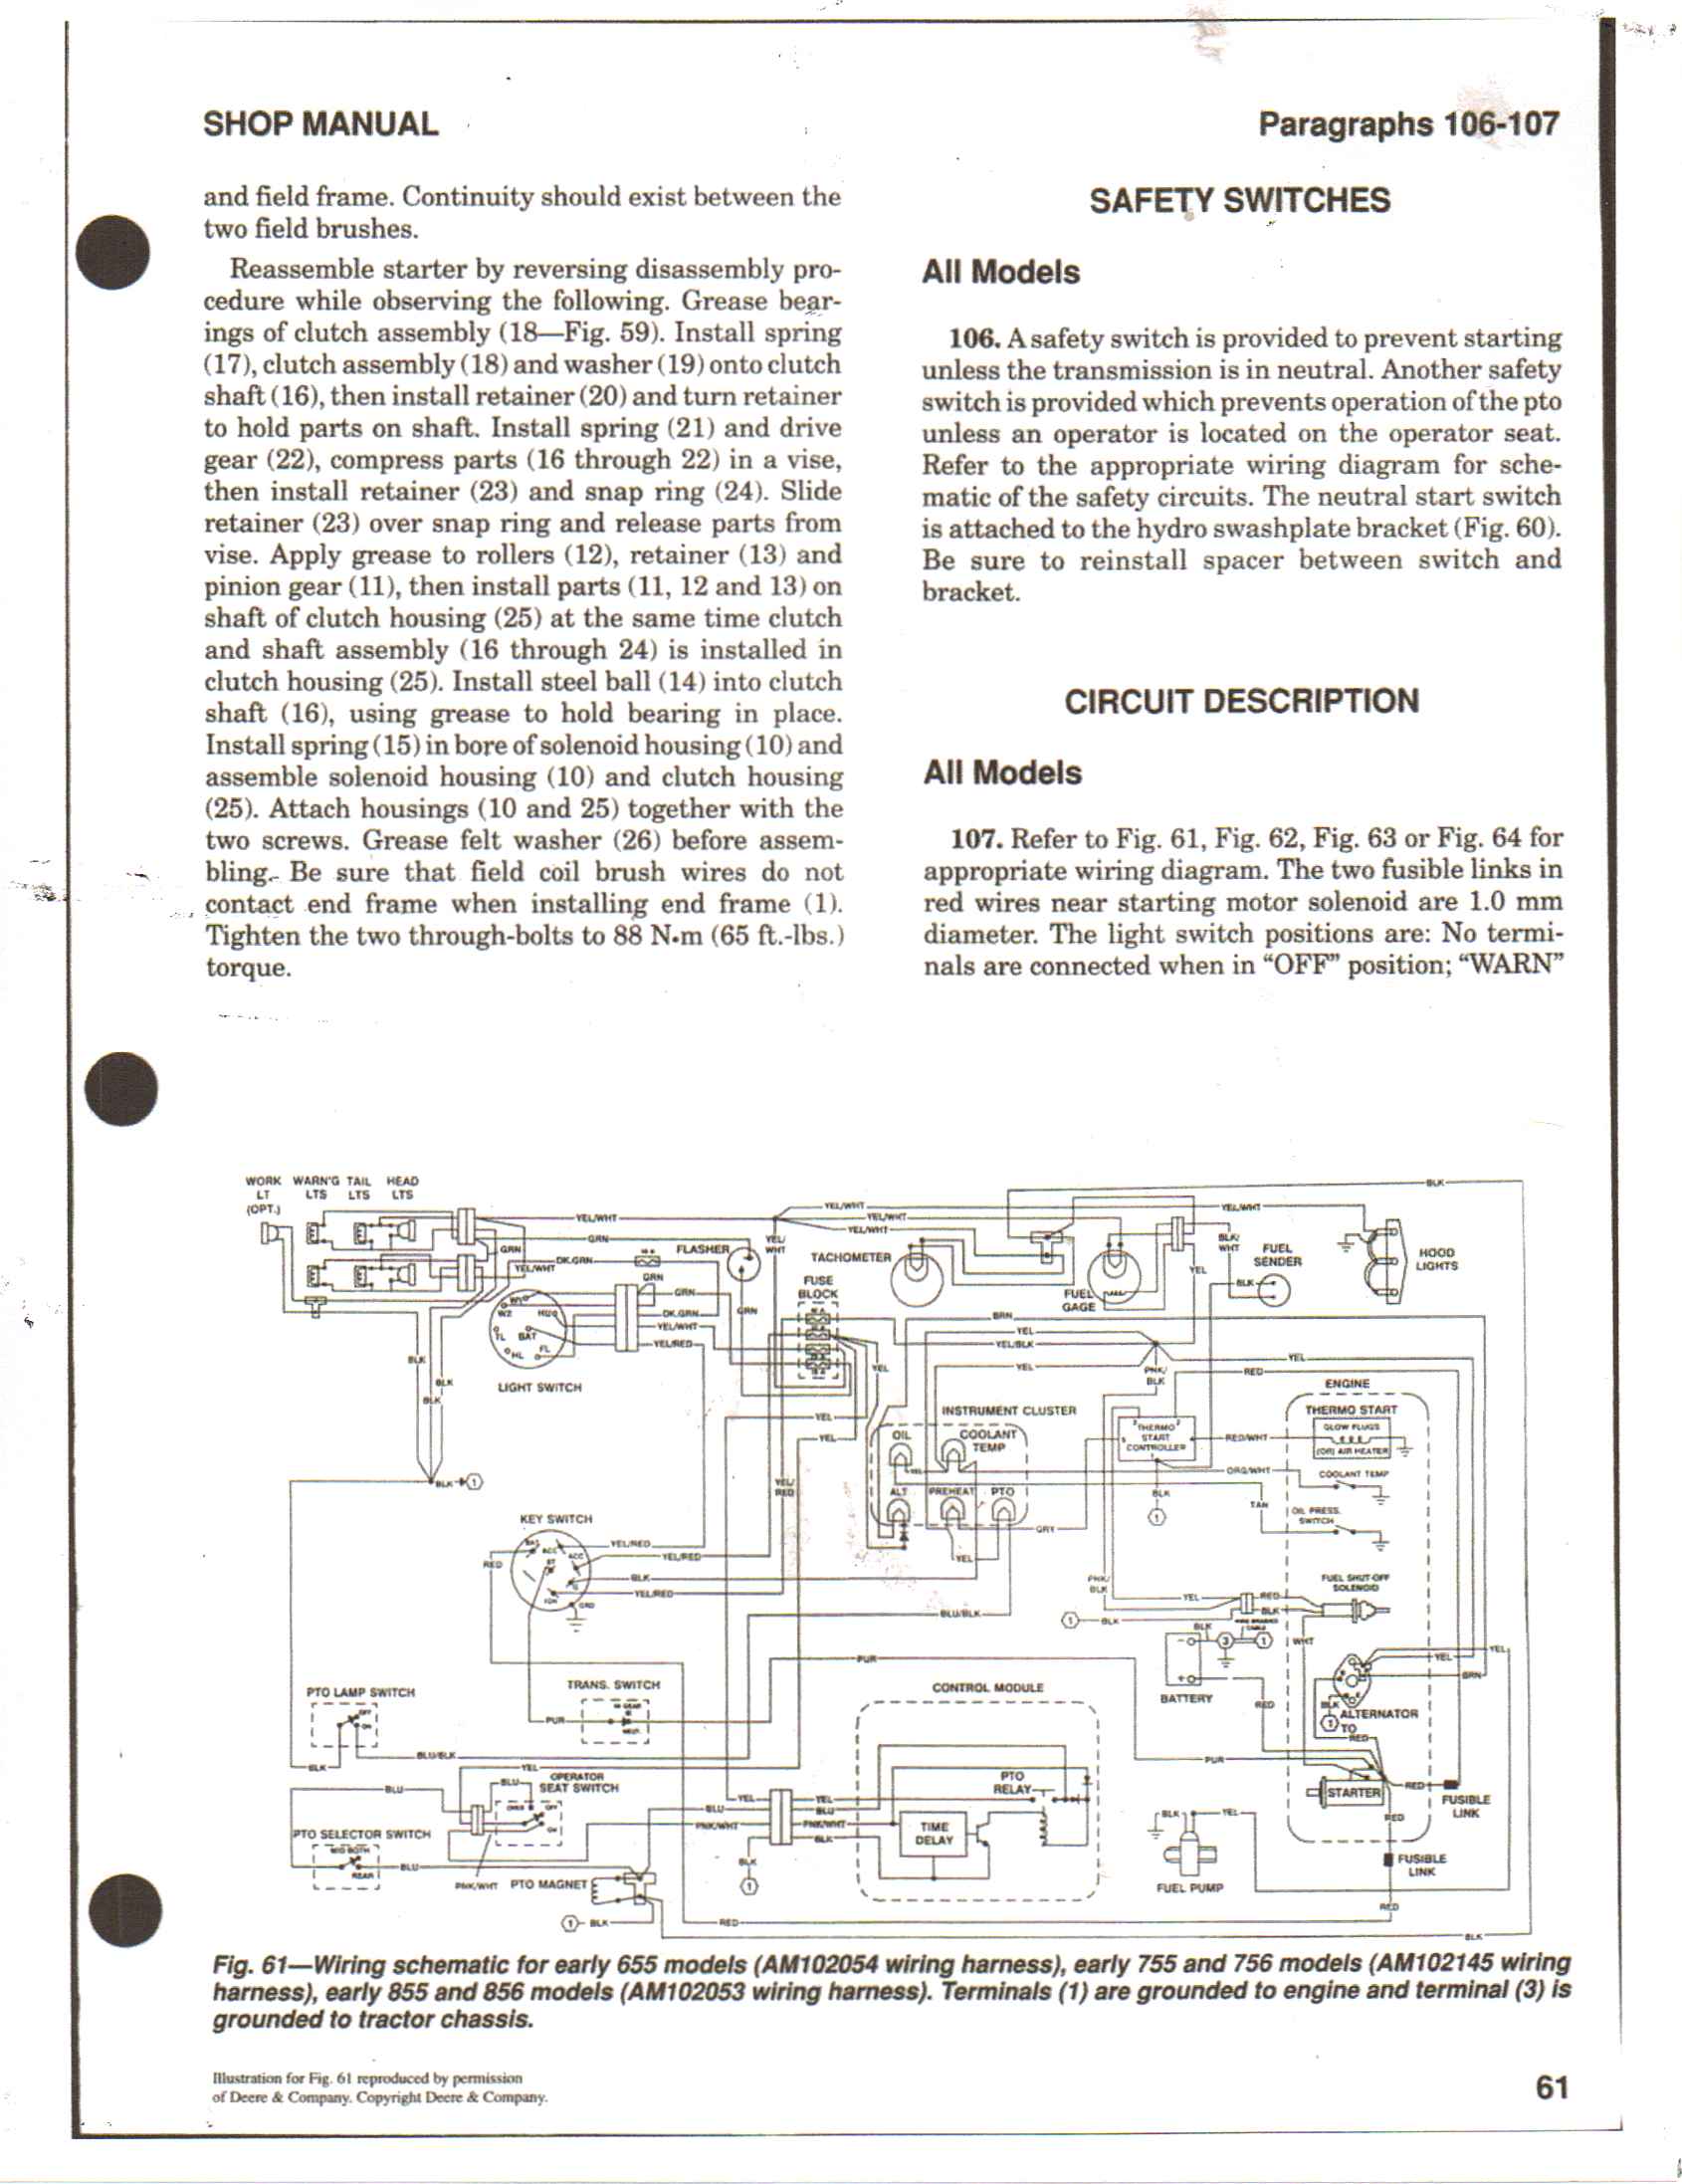 john deere 755 wiring diagram